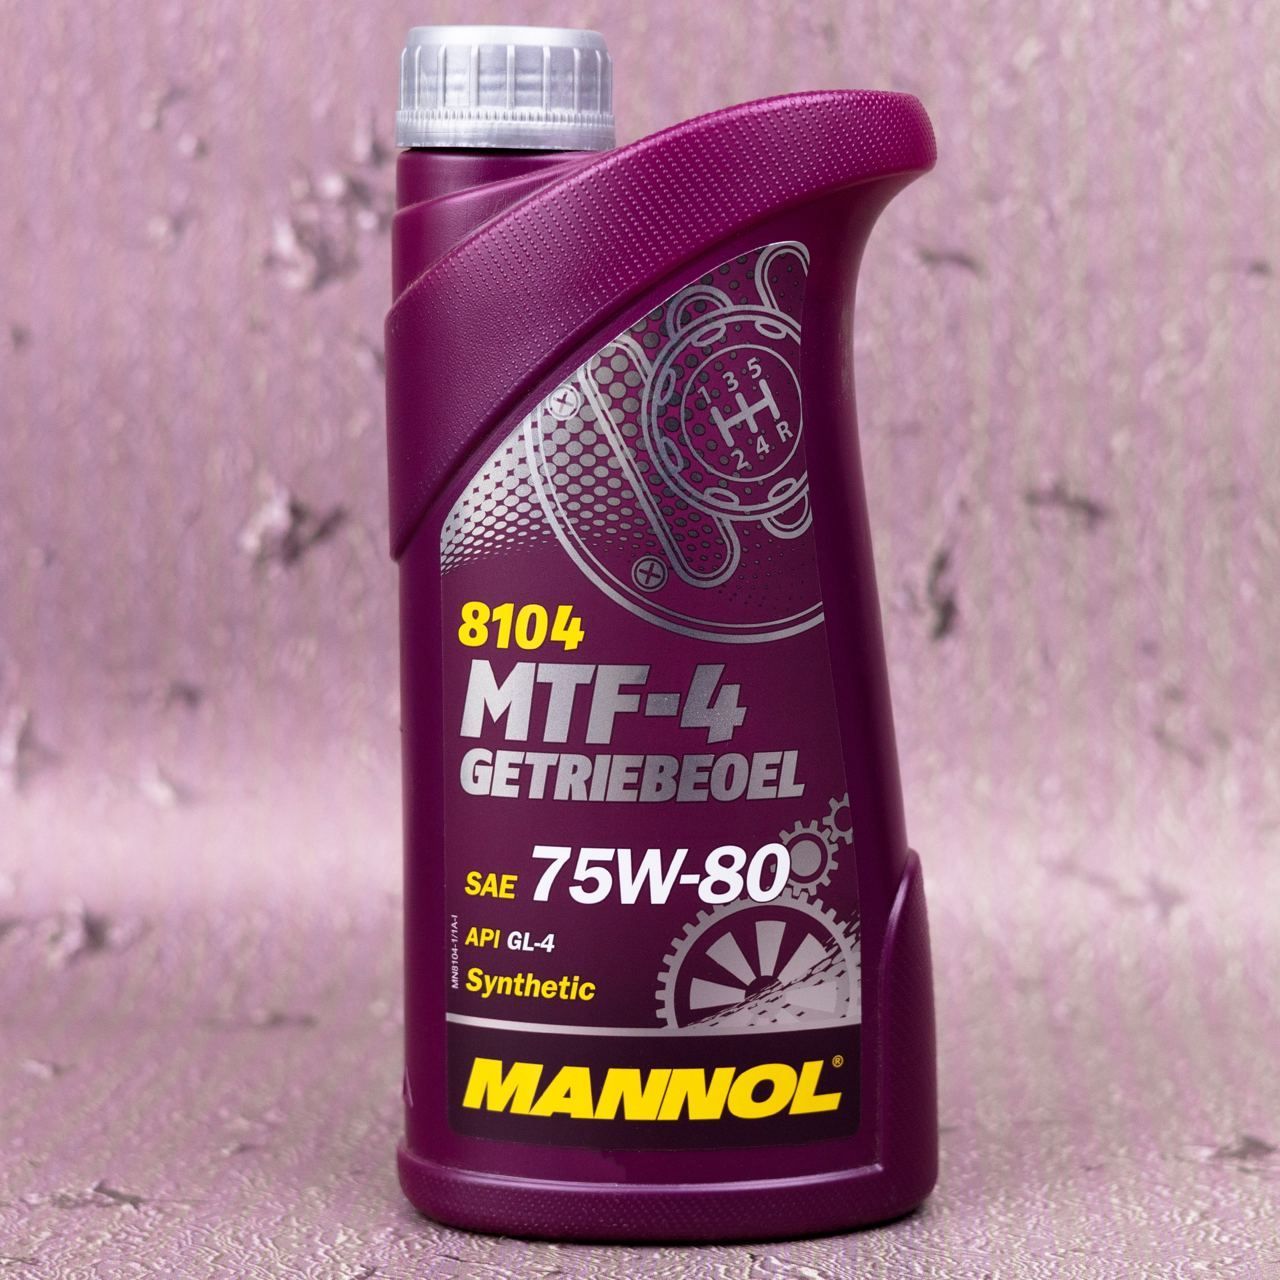 Mannol MTF-4 Getriebeoel 75w-80. МТФ 80w90. РОЛЬФ трансмиссионное масло для МКПП синтетика а. Масло в мкпп синтетика